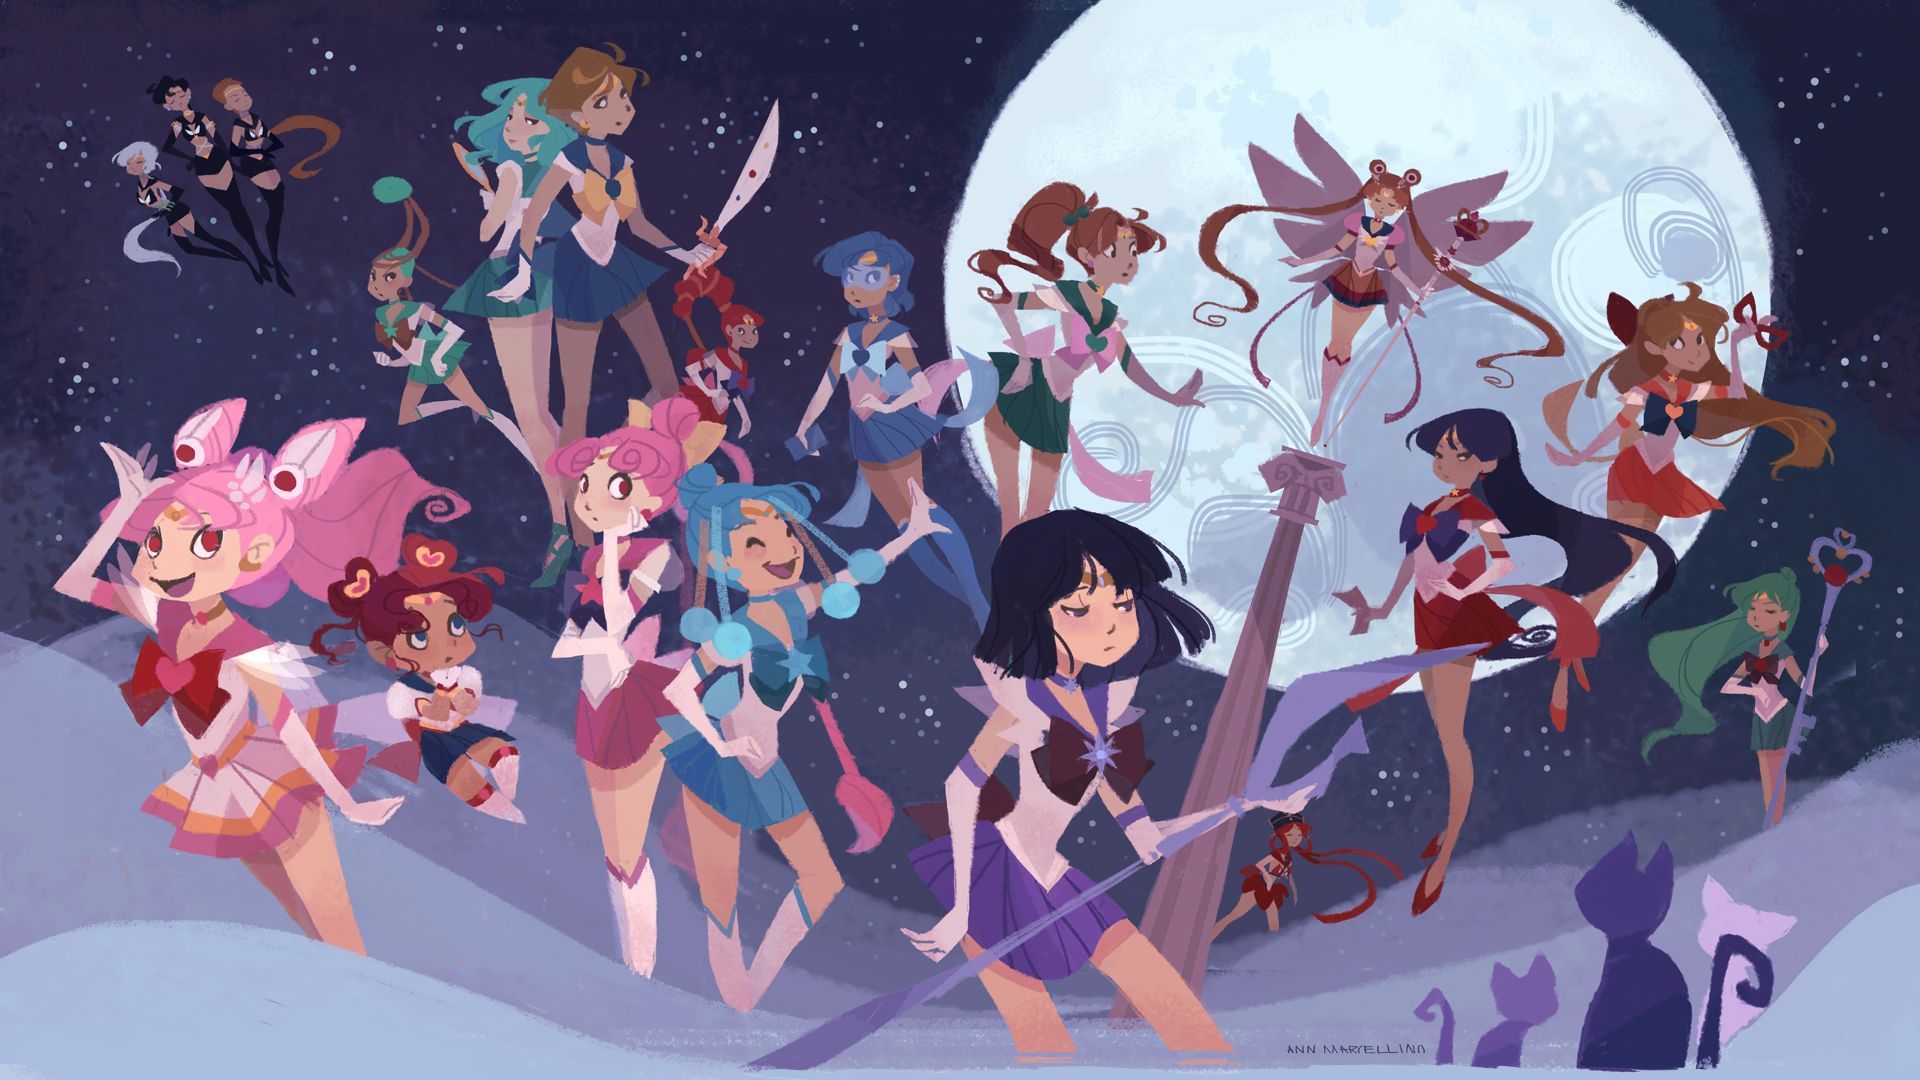 Sailor Moon Crystal Season 3 CD Wallpaper (Full) by xuweisen on DeviantArt